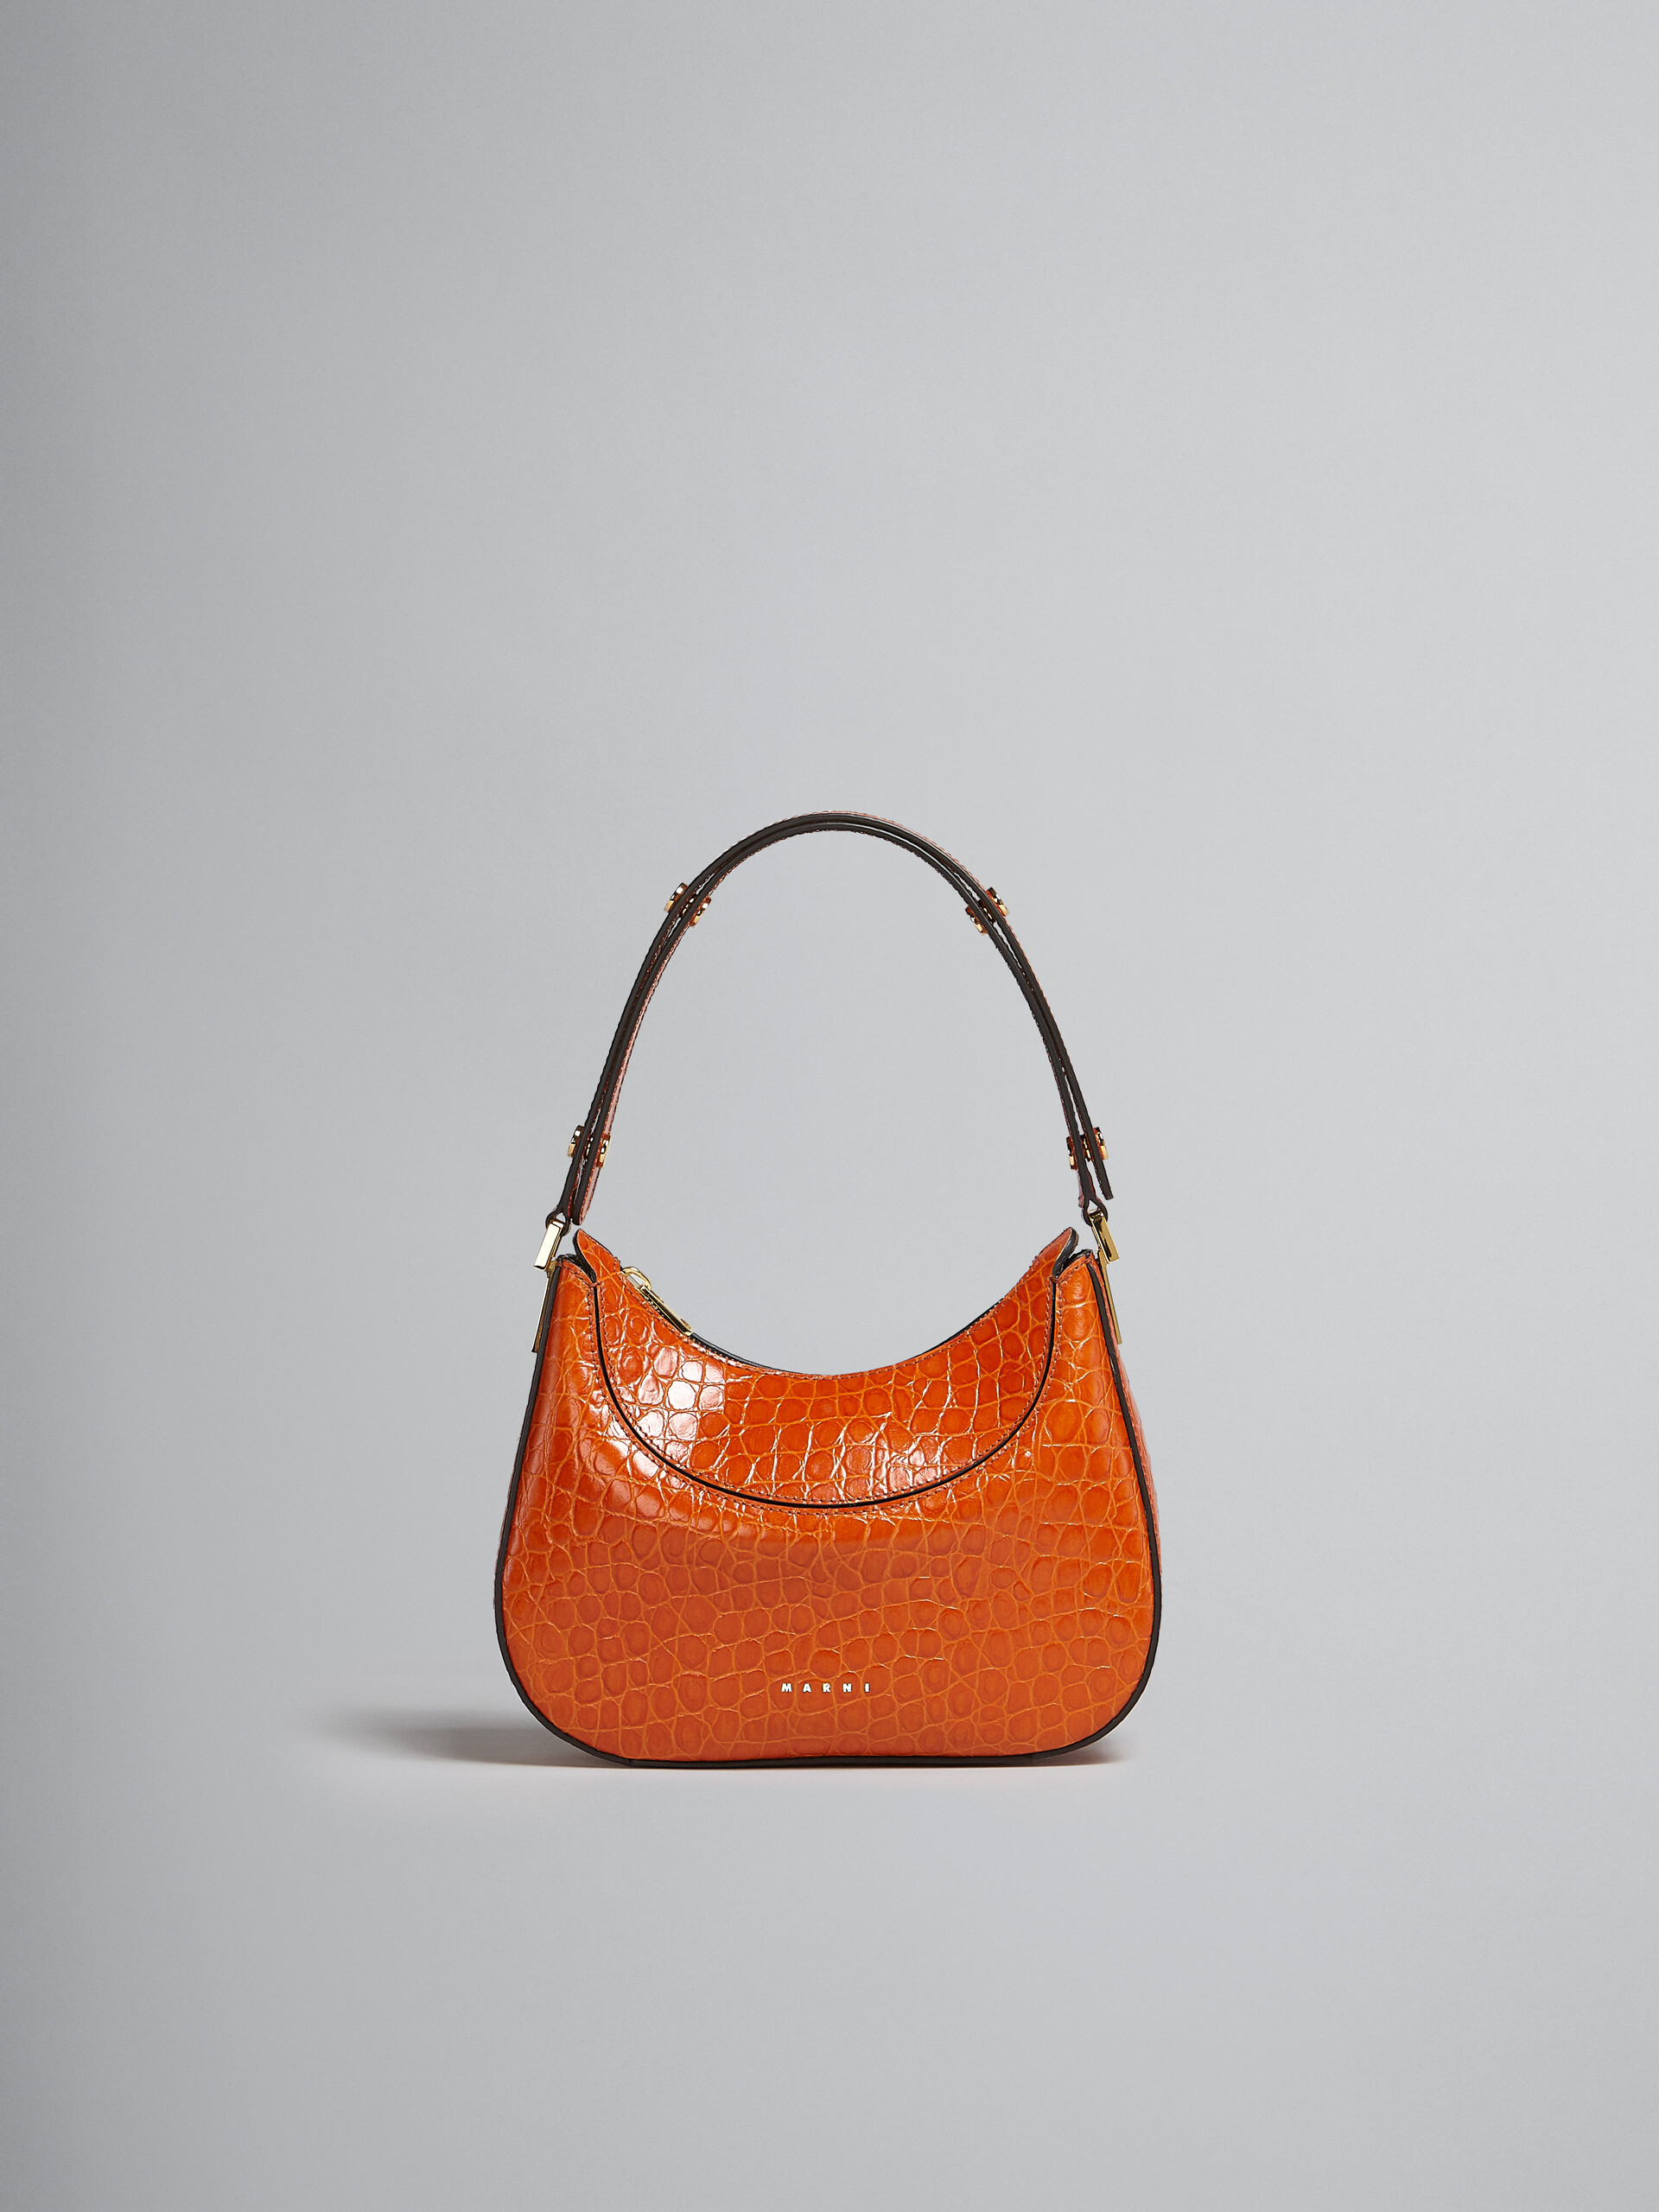 Milano Mini Bag in orange croco print leather - Handbag - Image 1